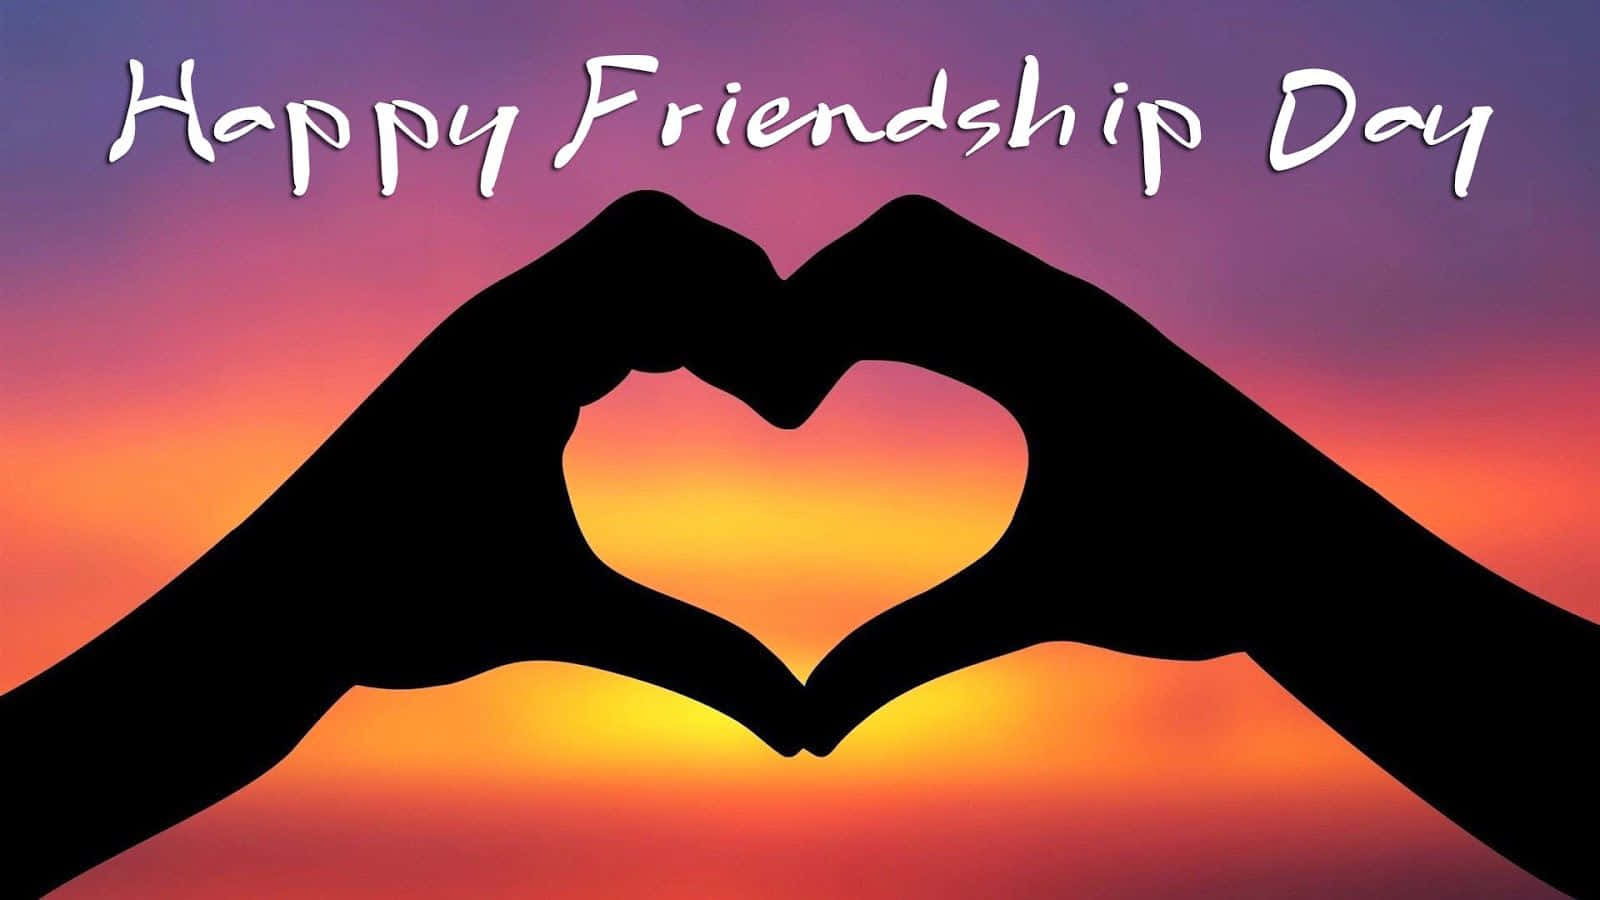 Celebrate Friendship this Friendship Day!